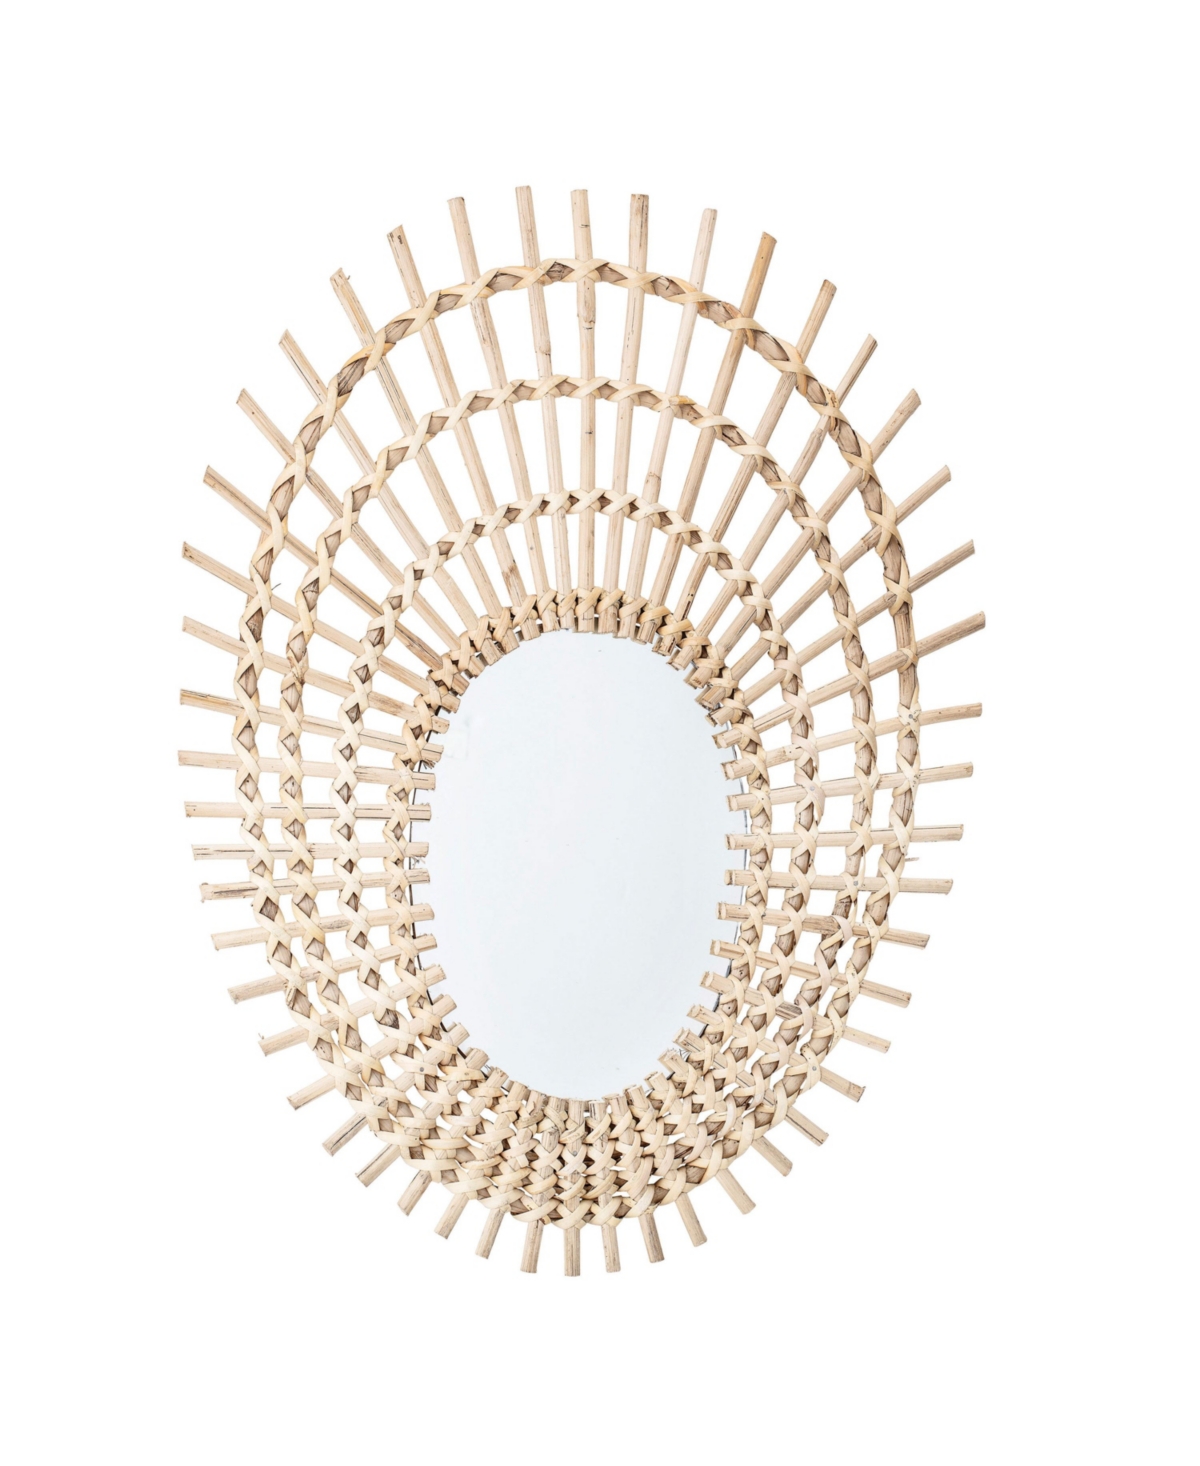 Decorative Beige Oval Rattan Mirror - Beige